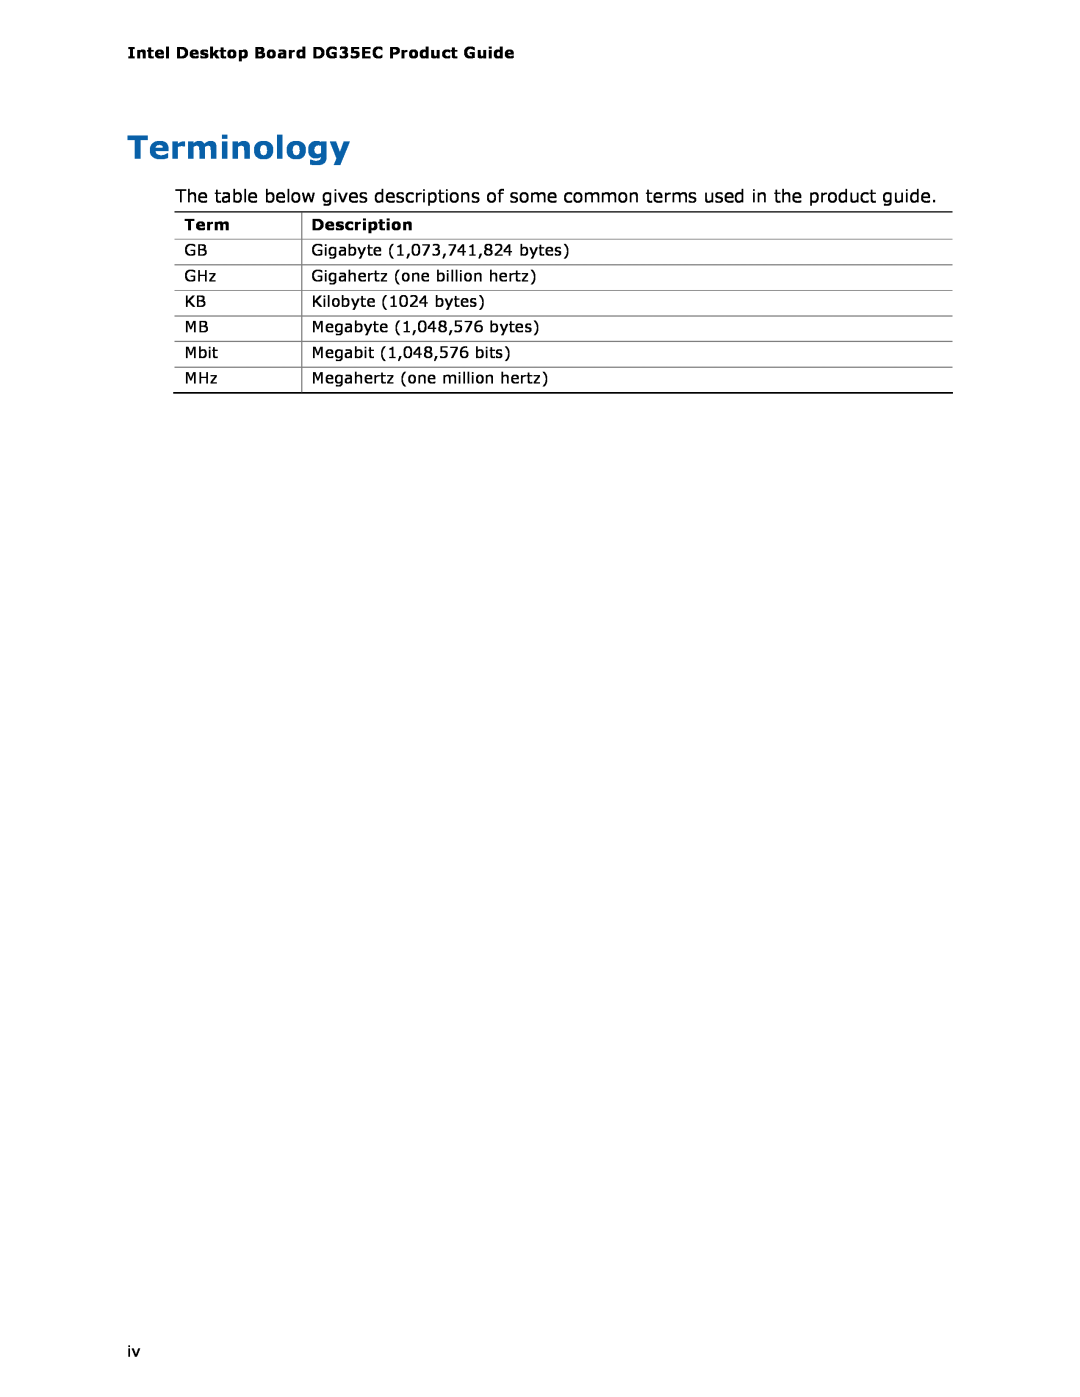 Intel manual Terminology, Intel Desktop Board DG35EC Product Guide, Description 